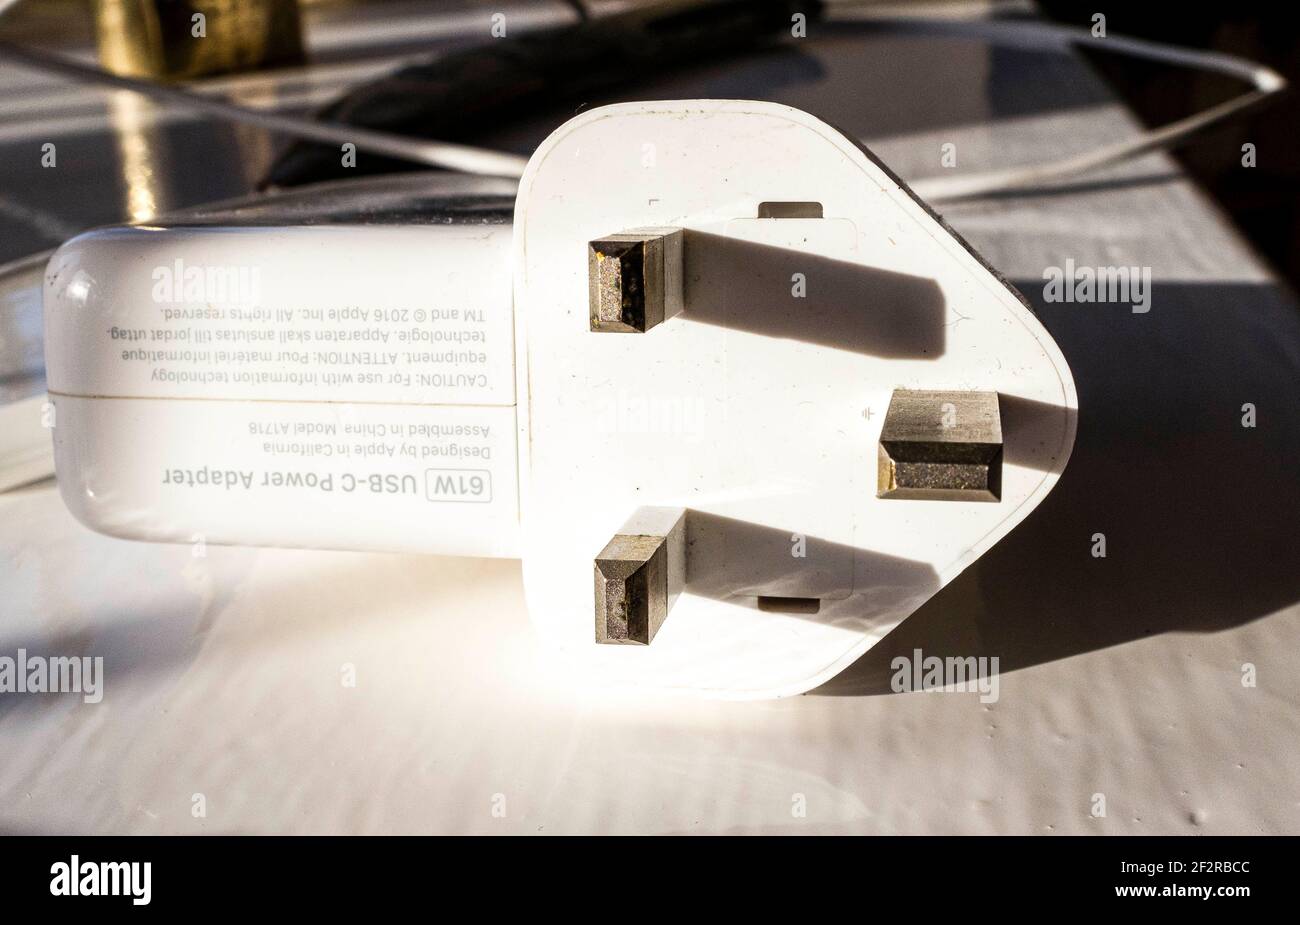 Apple USB-C power adaptor and 3 pin electric charging plug Stock Photo